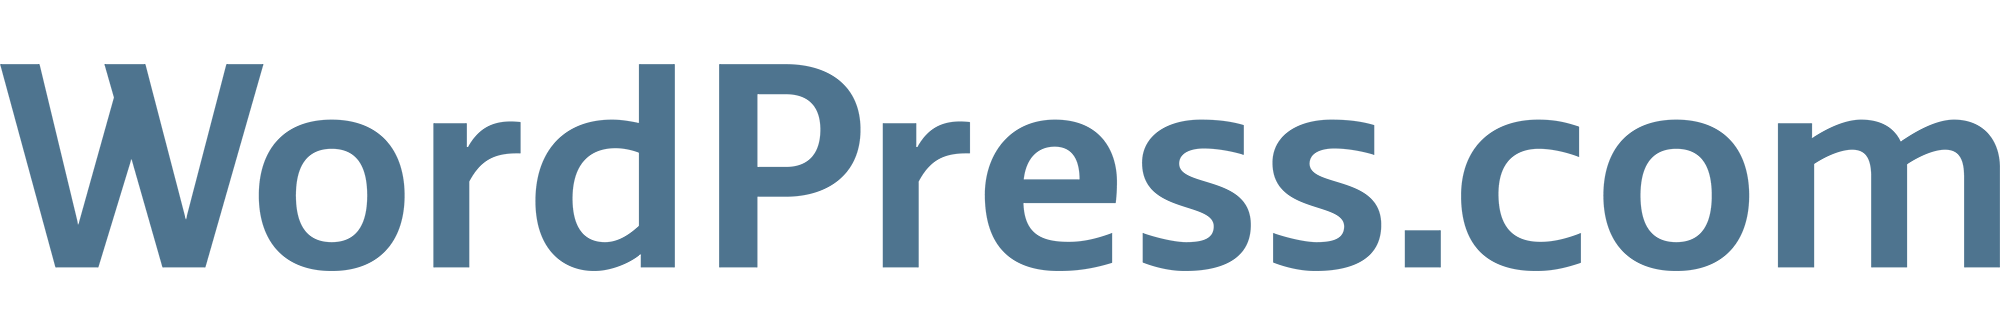 Logo WordPress.com